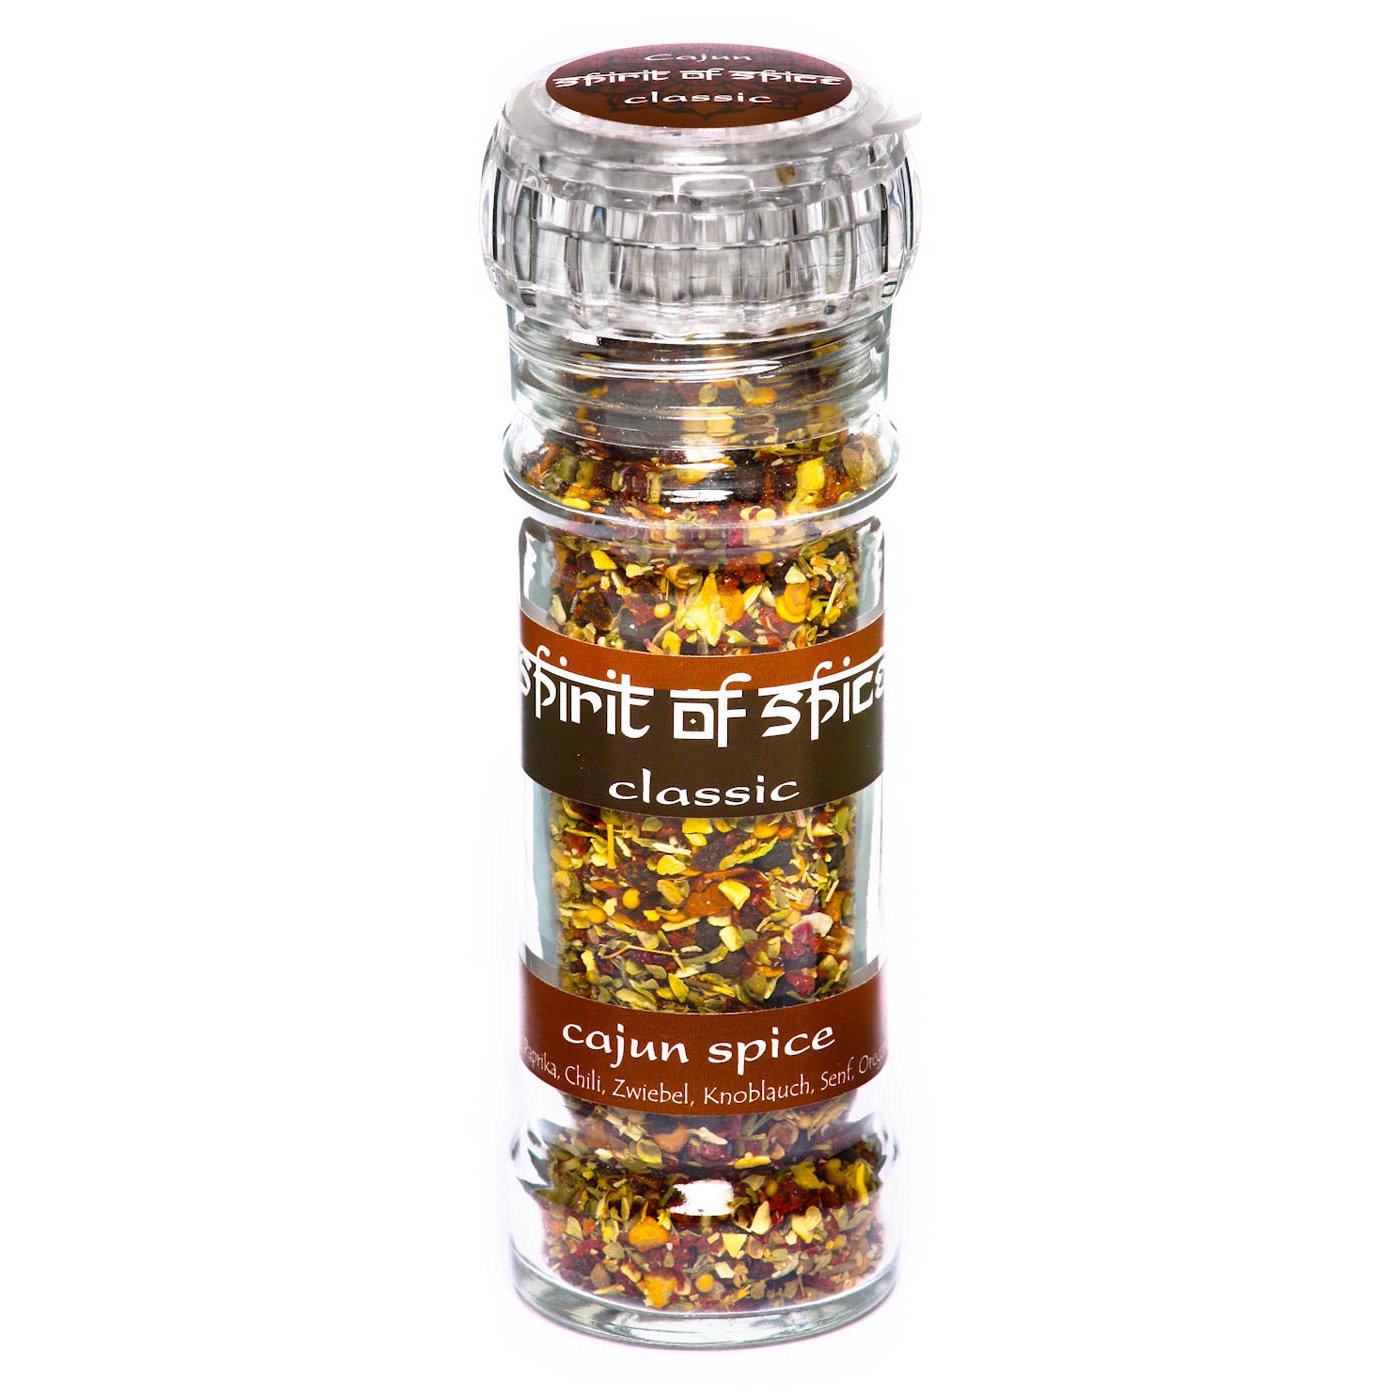 cajun spice, Gewürz | Kräuter | Gewürzmischung - Spirit of Spice